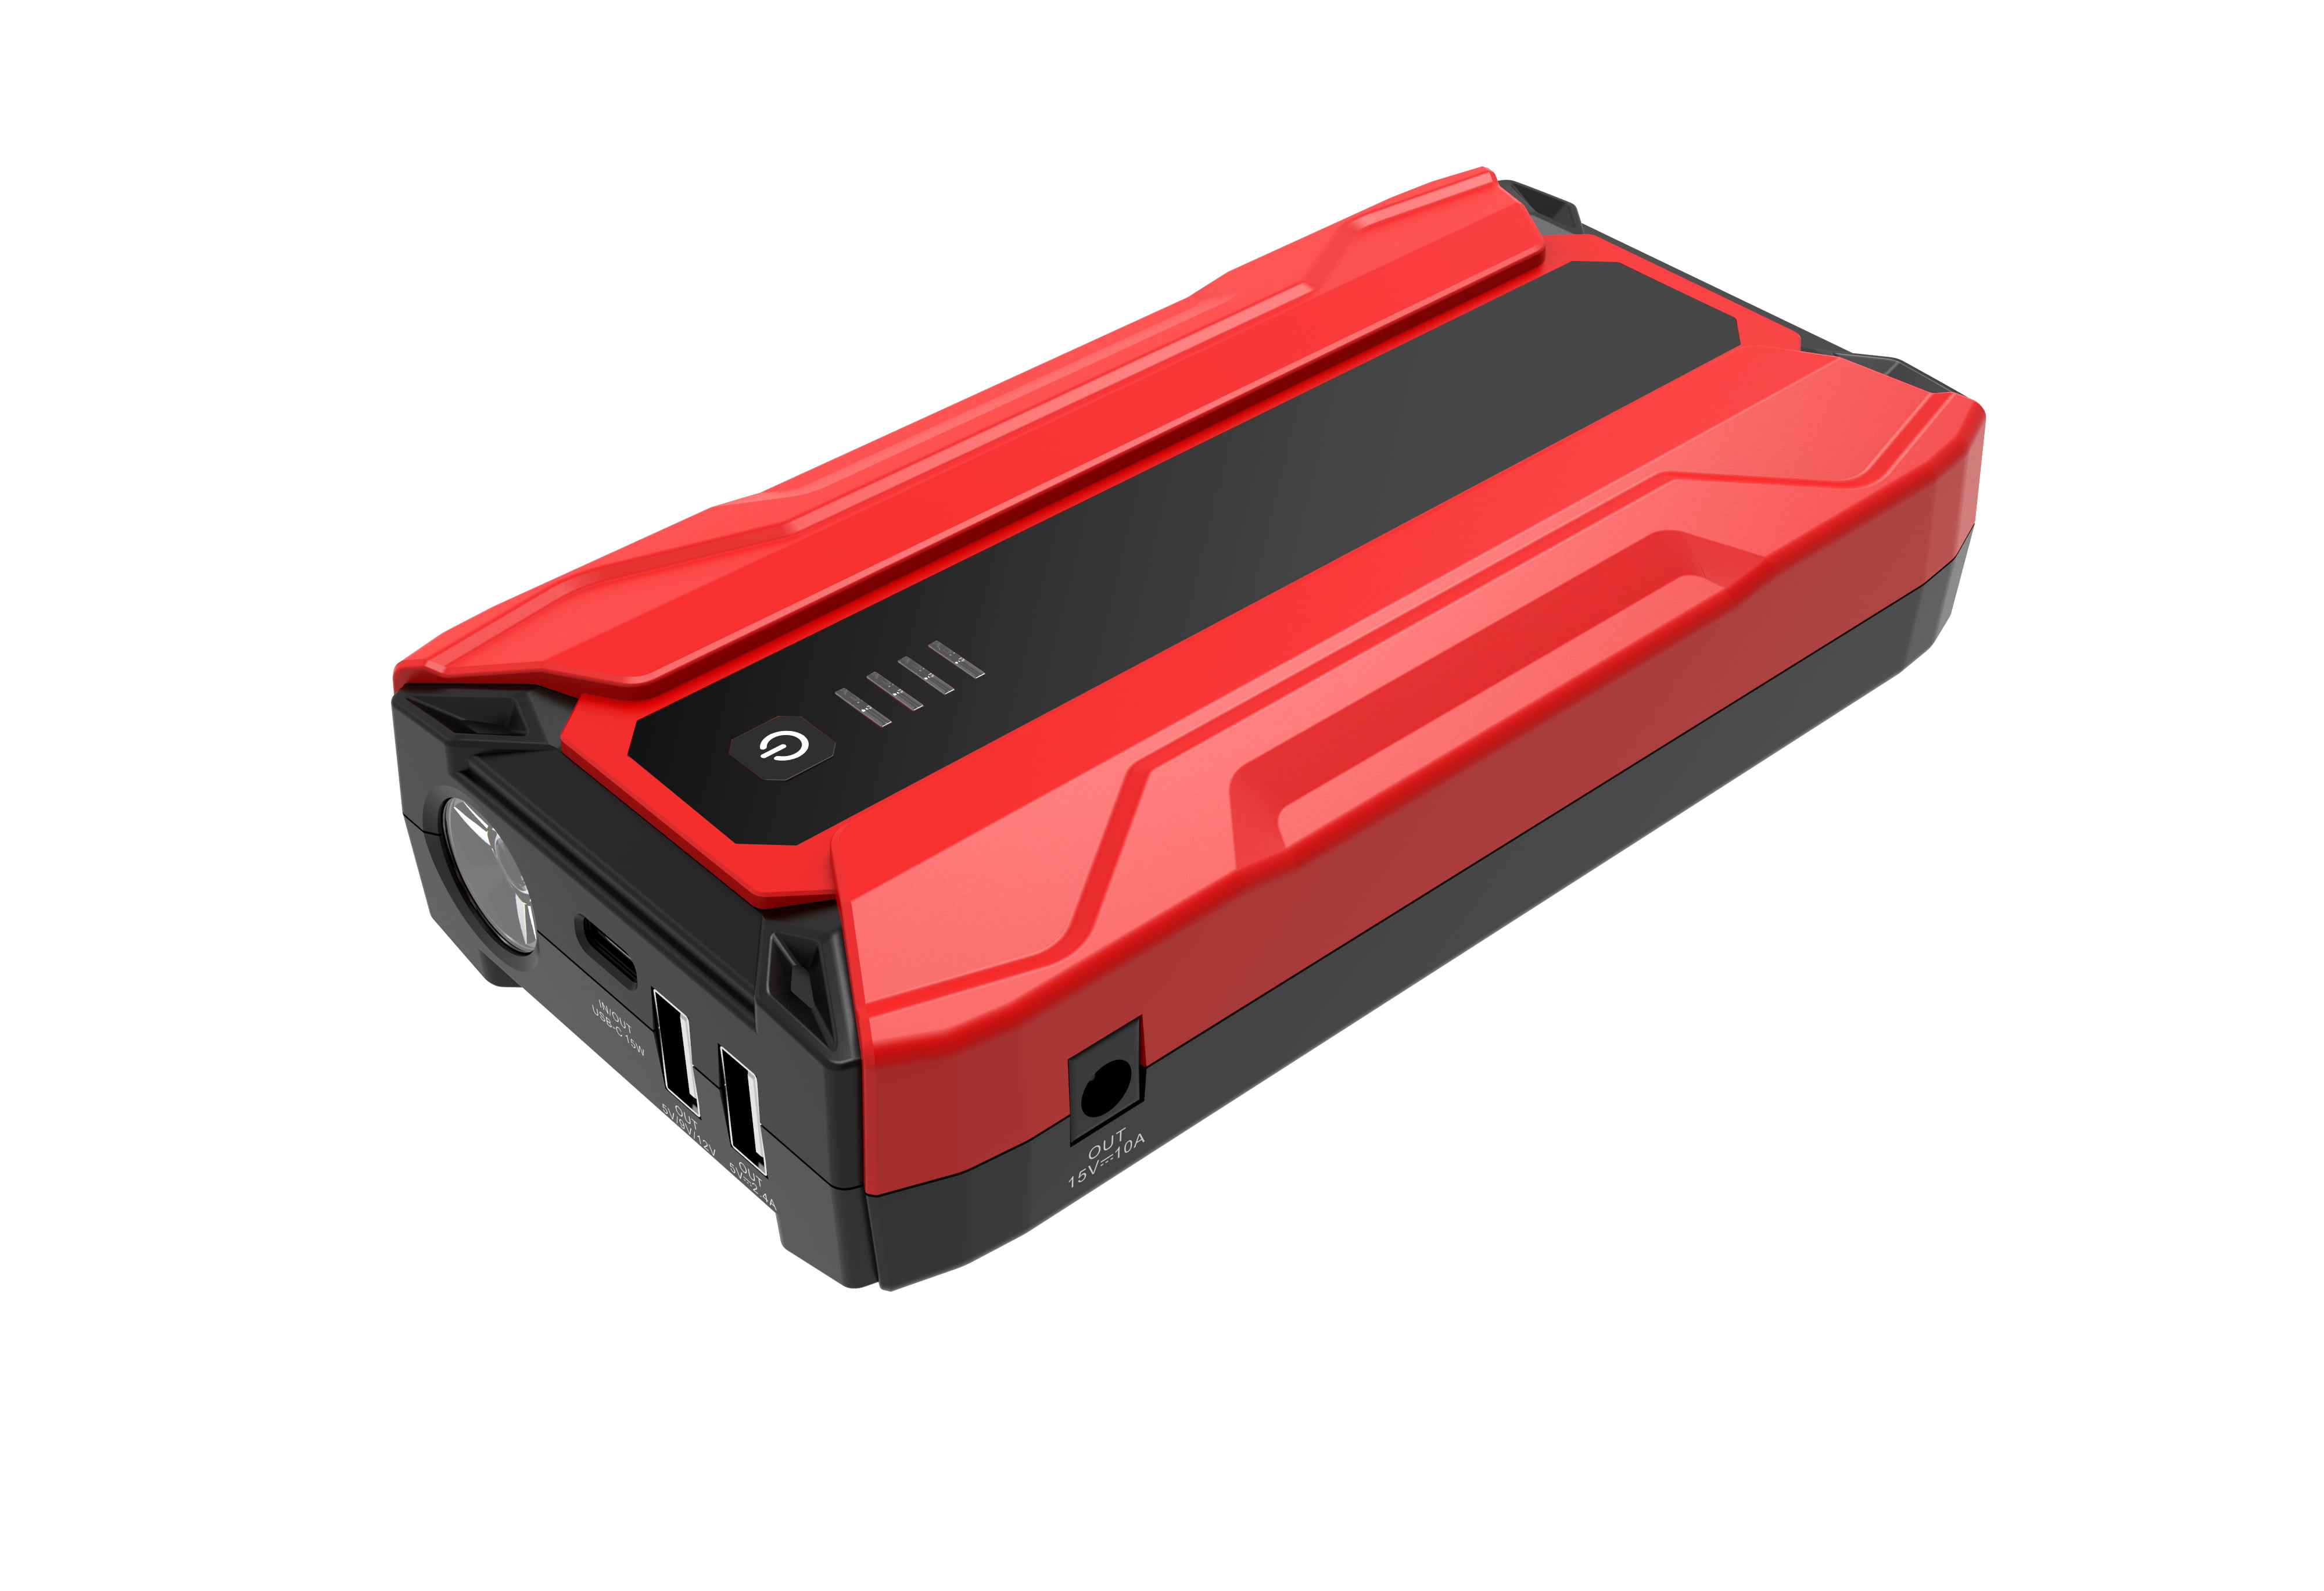 ,12-Volt Portable Lithium Car Battery Jump Starter,USB Quick Charge with Built-in LED Light up to 8.0L Gas, 6.0L Diesel Engine Jump Starter Meterk 1500A Peak 18000mAh Car Jump Starter